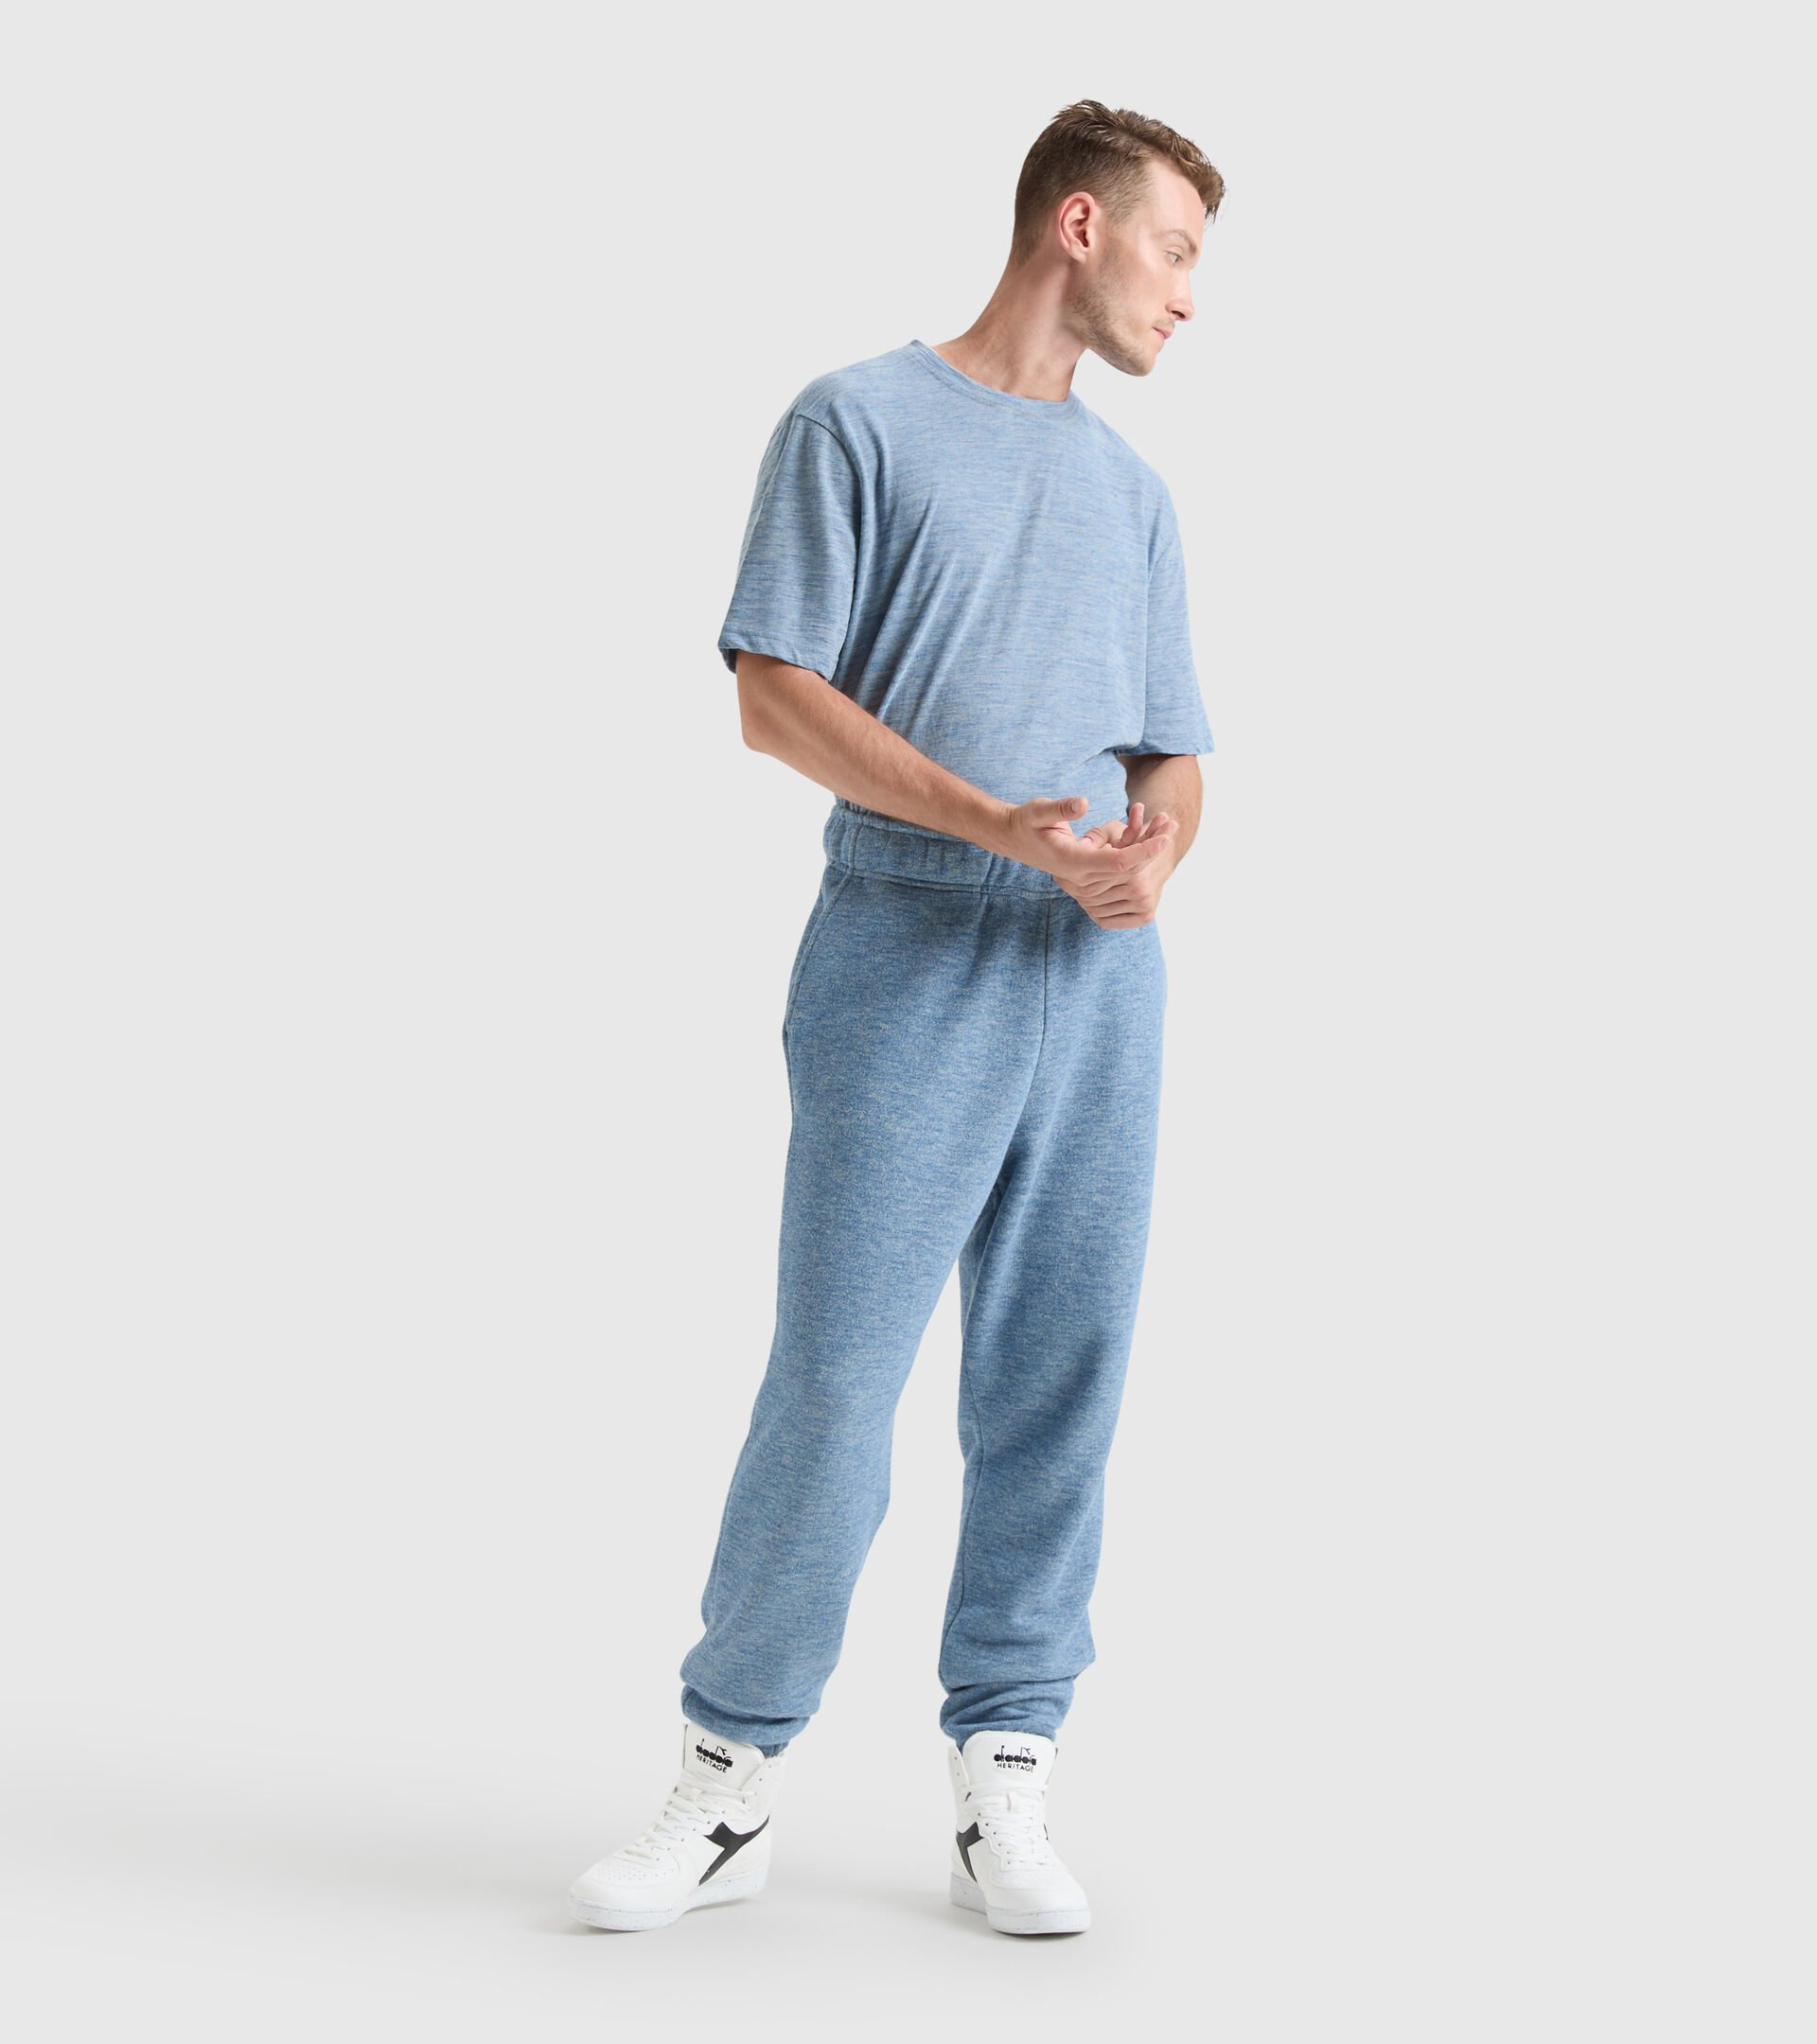 Sports trousers - Unisex PANT MANIFESTO 2030 DELFT MELANGE - Diadora